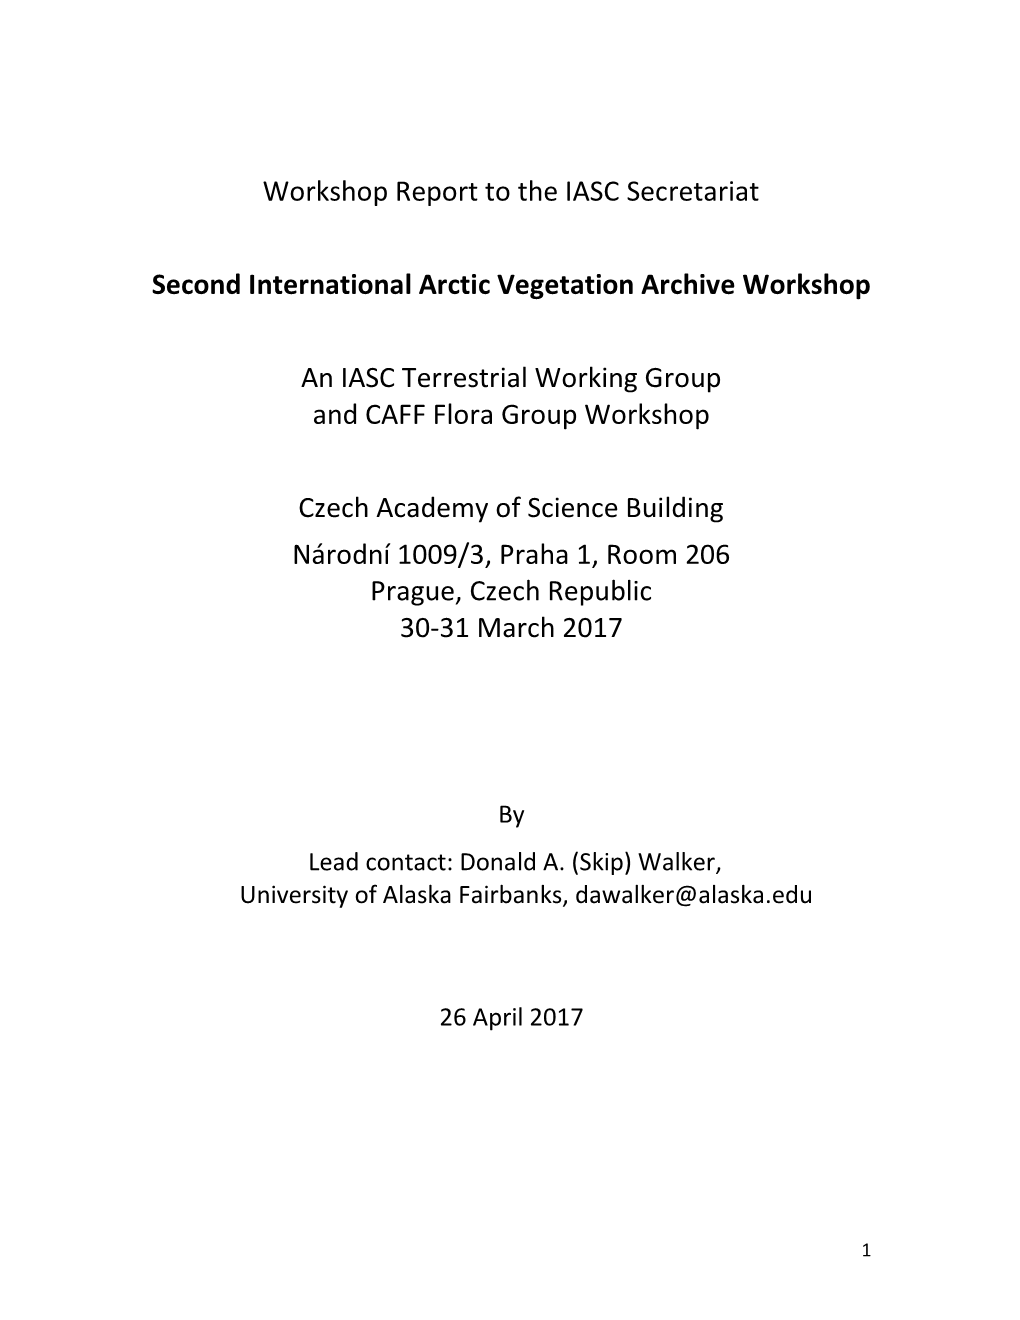 Final AVA Workshop Report 20170426(2)Swjlp